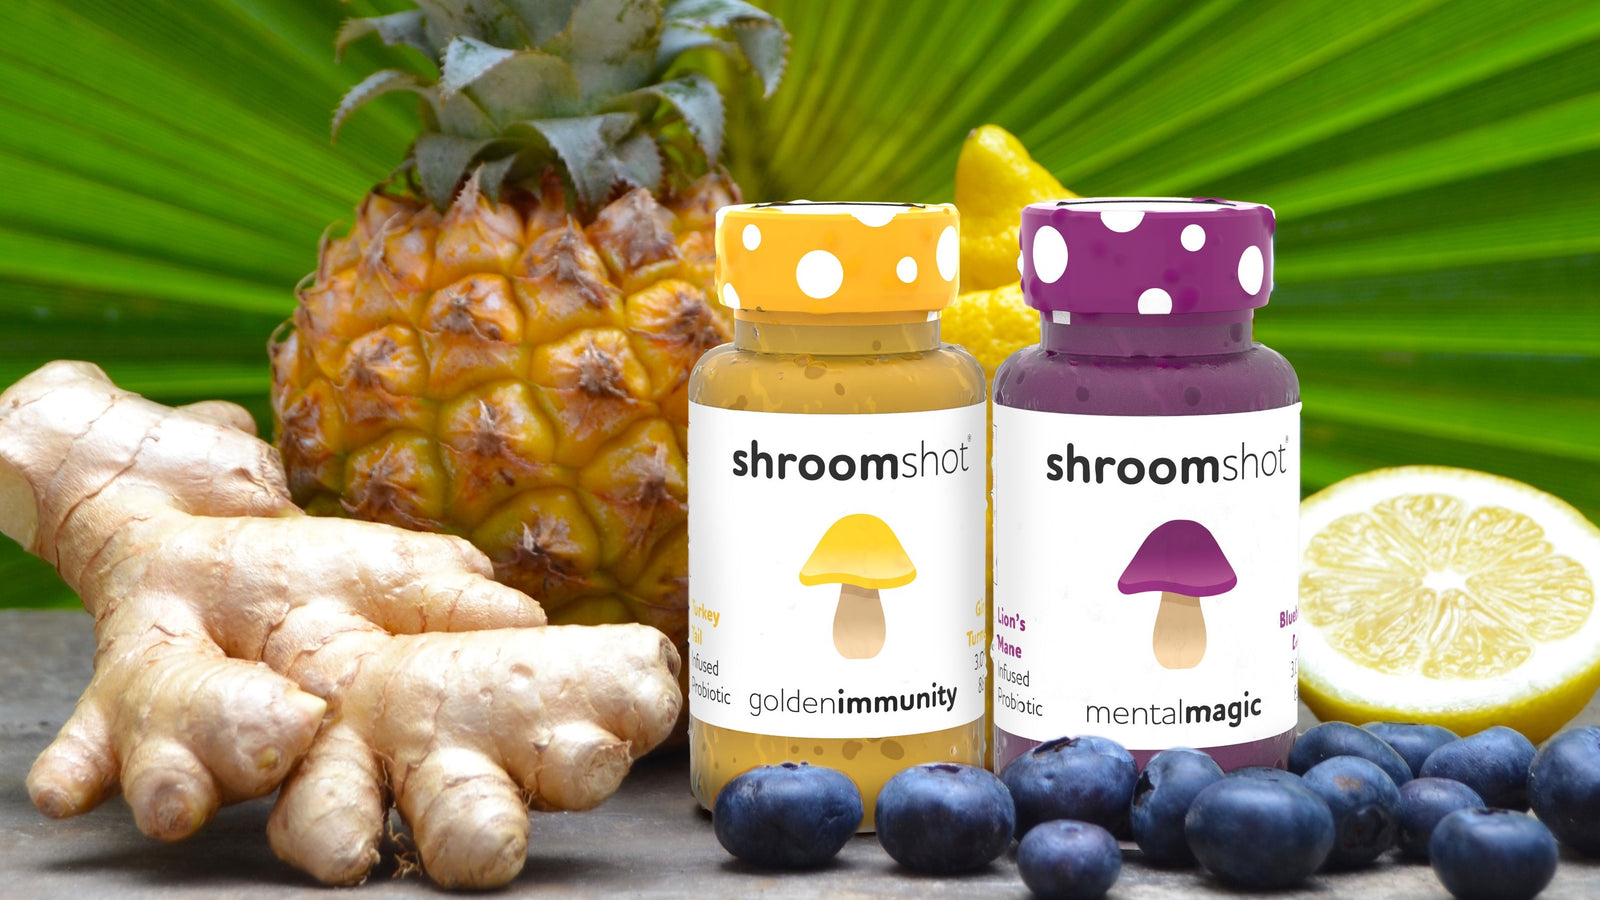 Twho Shroomworks shot bottles in front of a pineapple, ginger root, lemon and blueberries